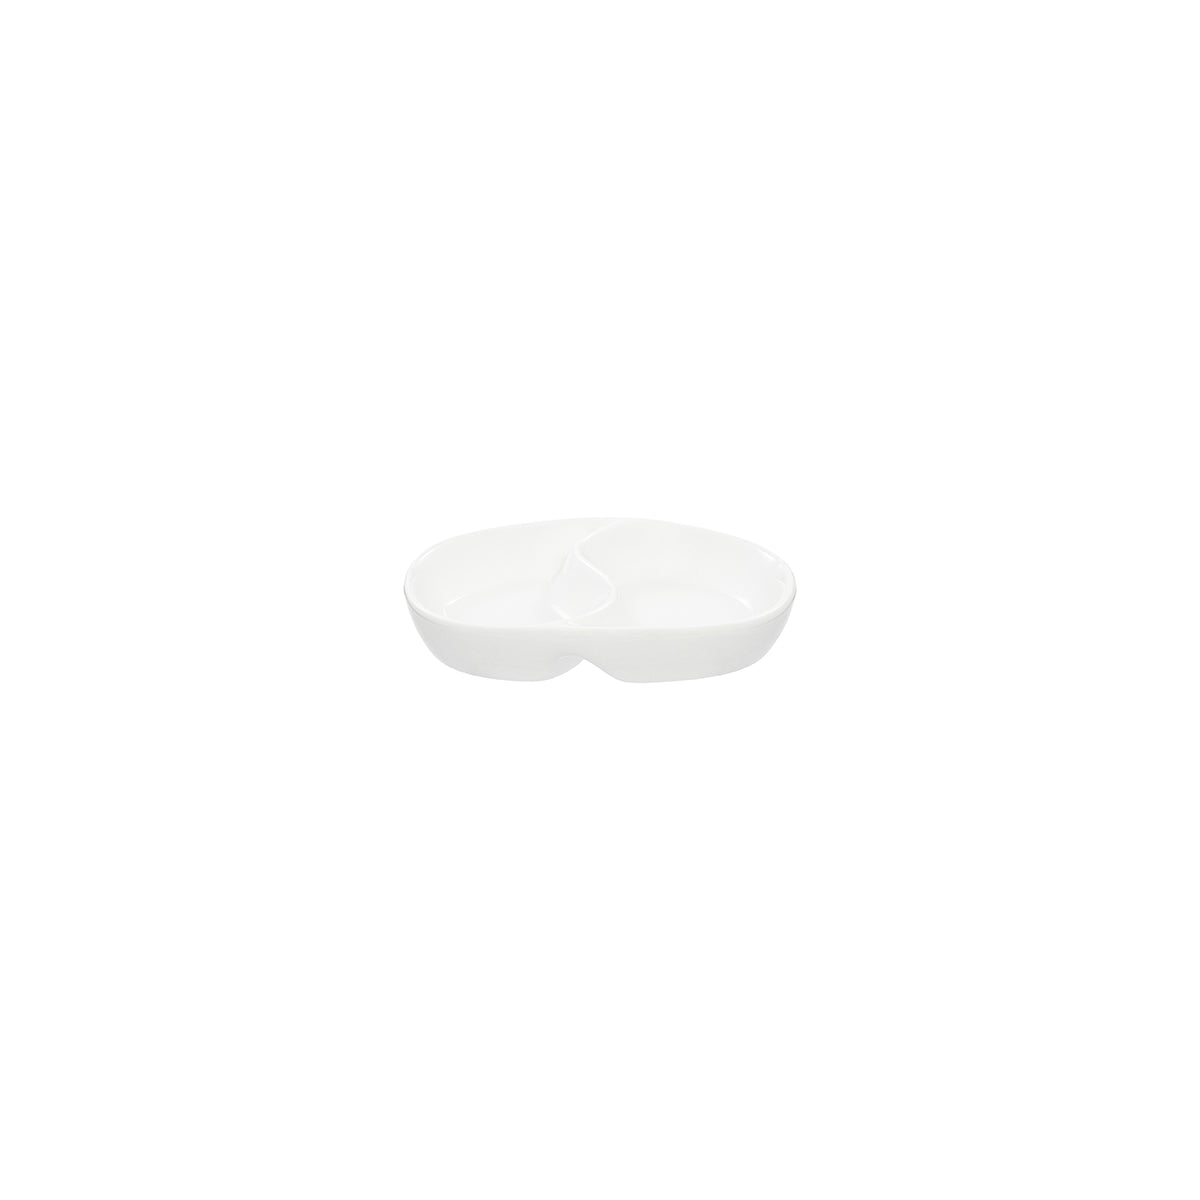 92032 Tablekraft Core White Oval Divided Sauce Dish 110x70mm Tomkin Australia Hospitality Supplies